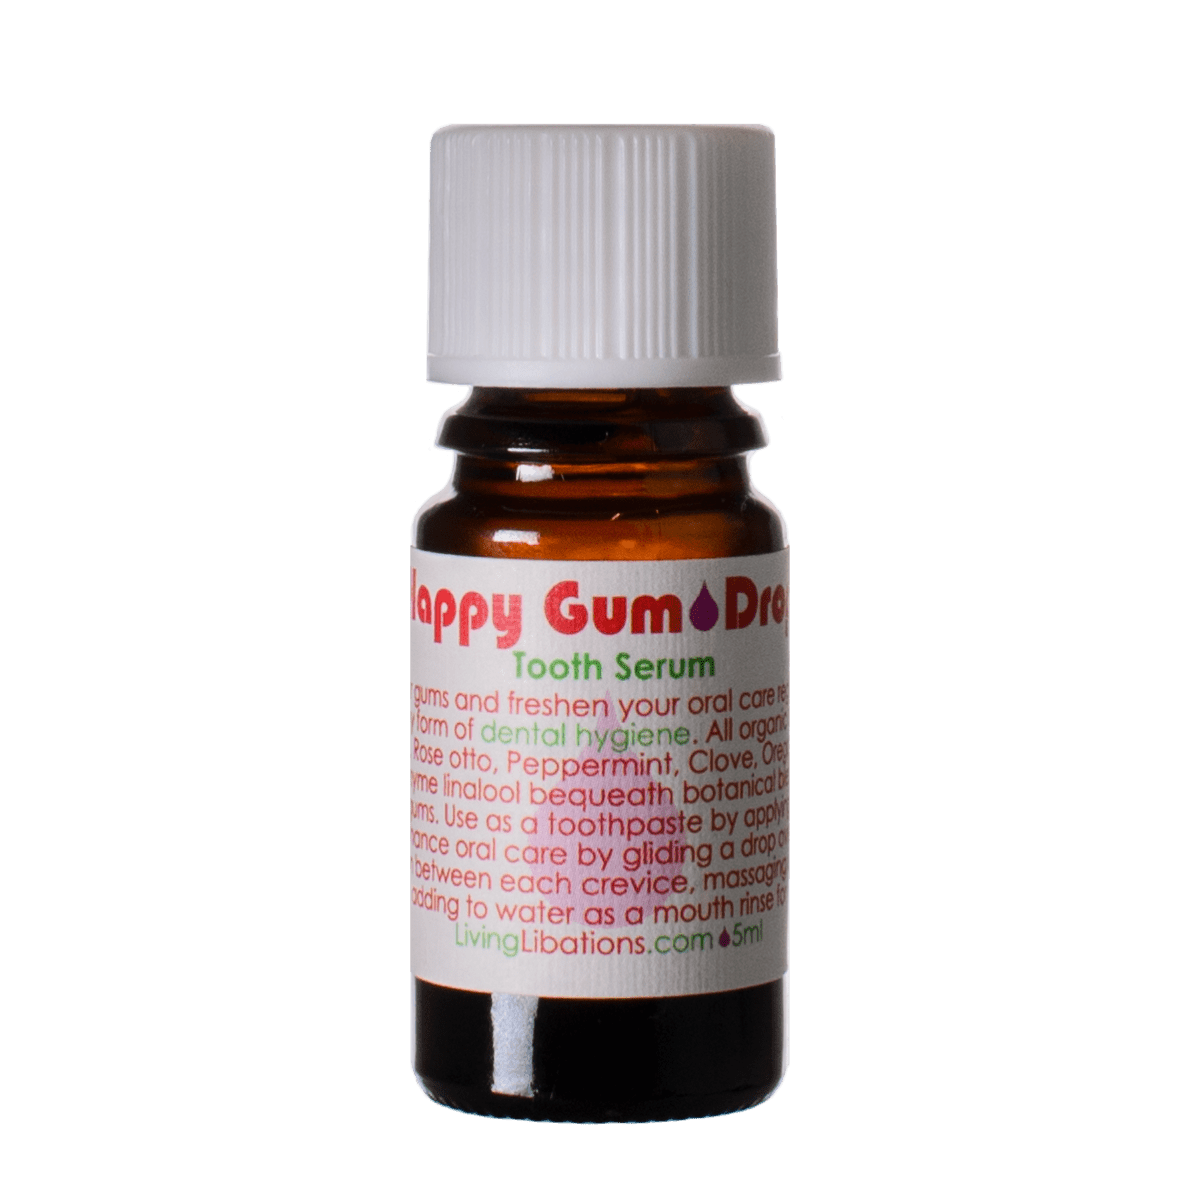 Living Libations tooth and gum serum Happy Gum Drops 5ml sunja link - canada